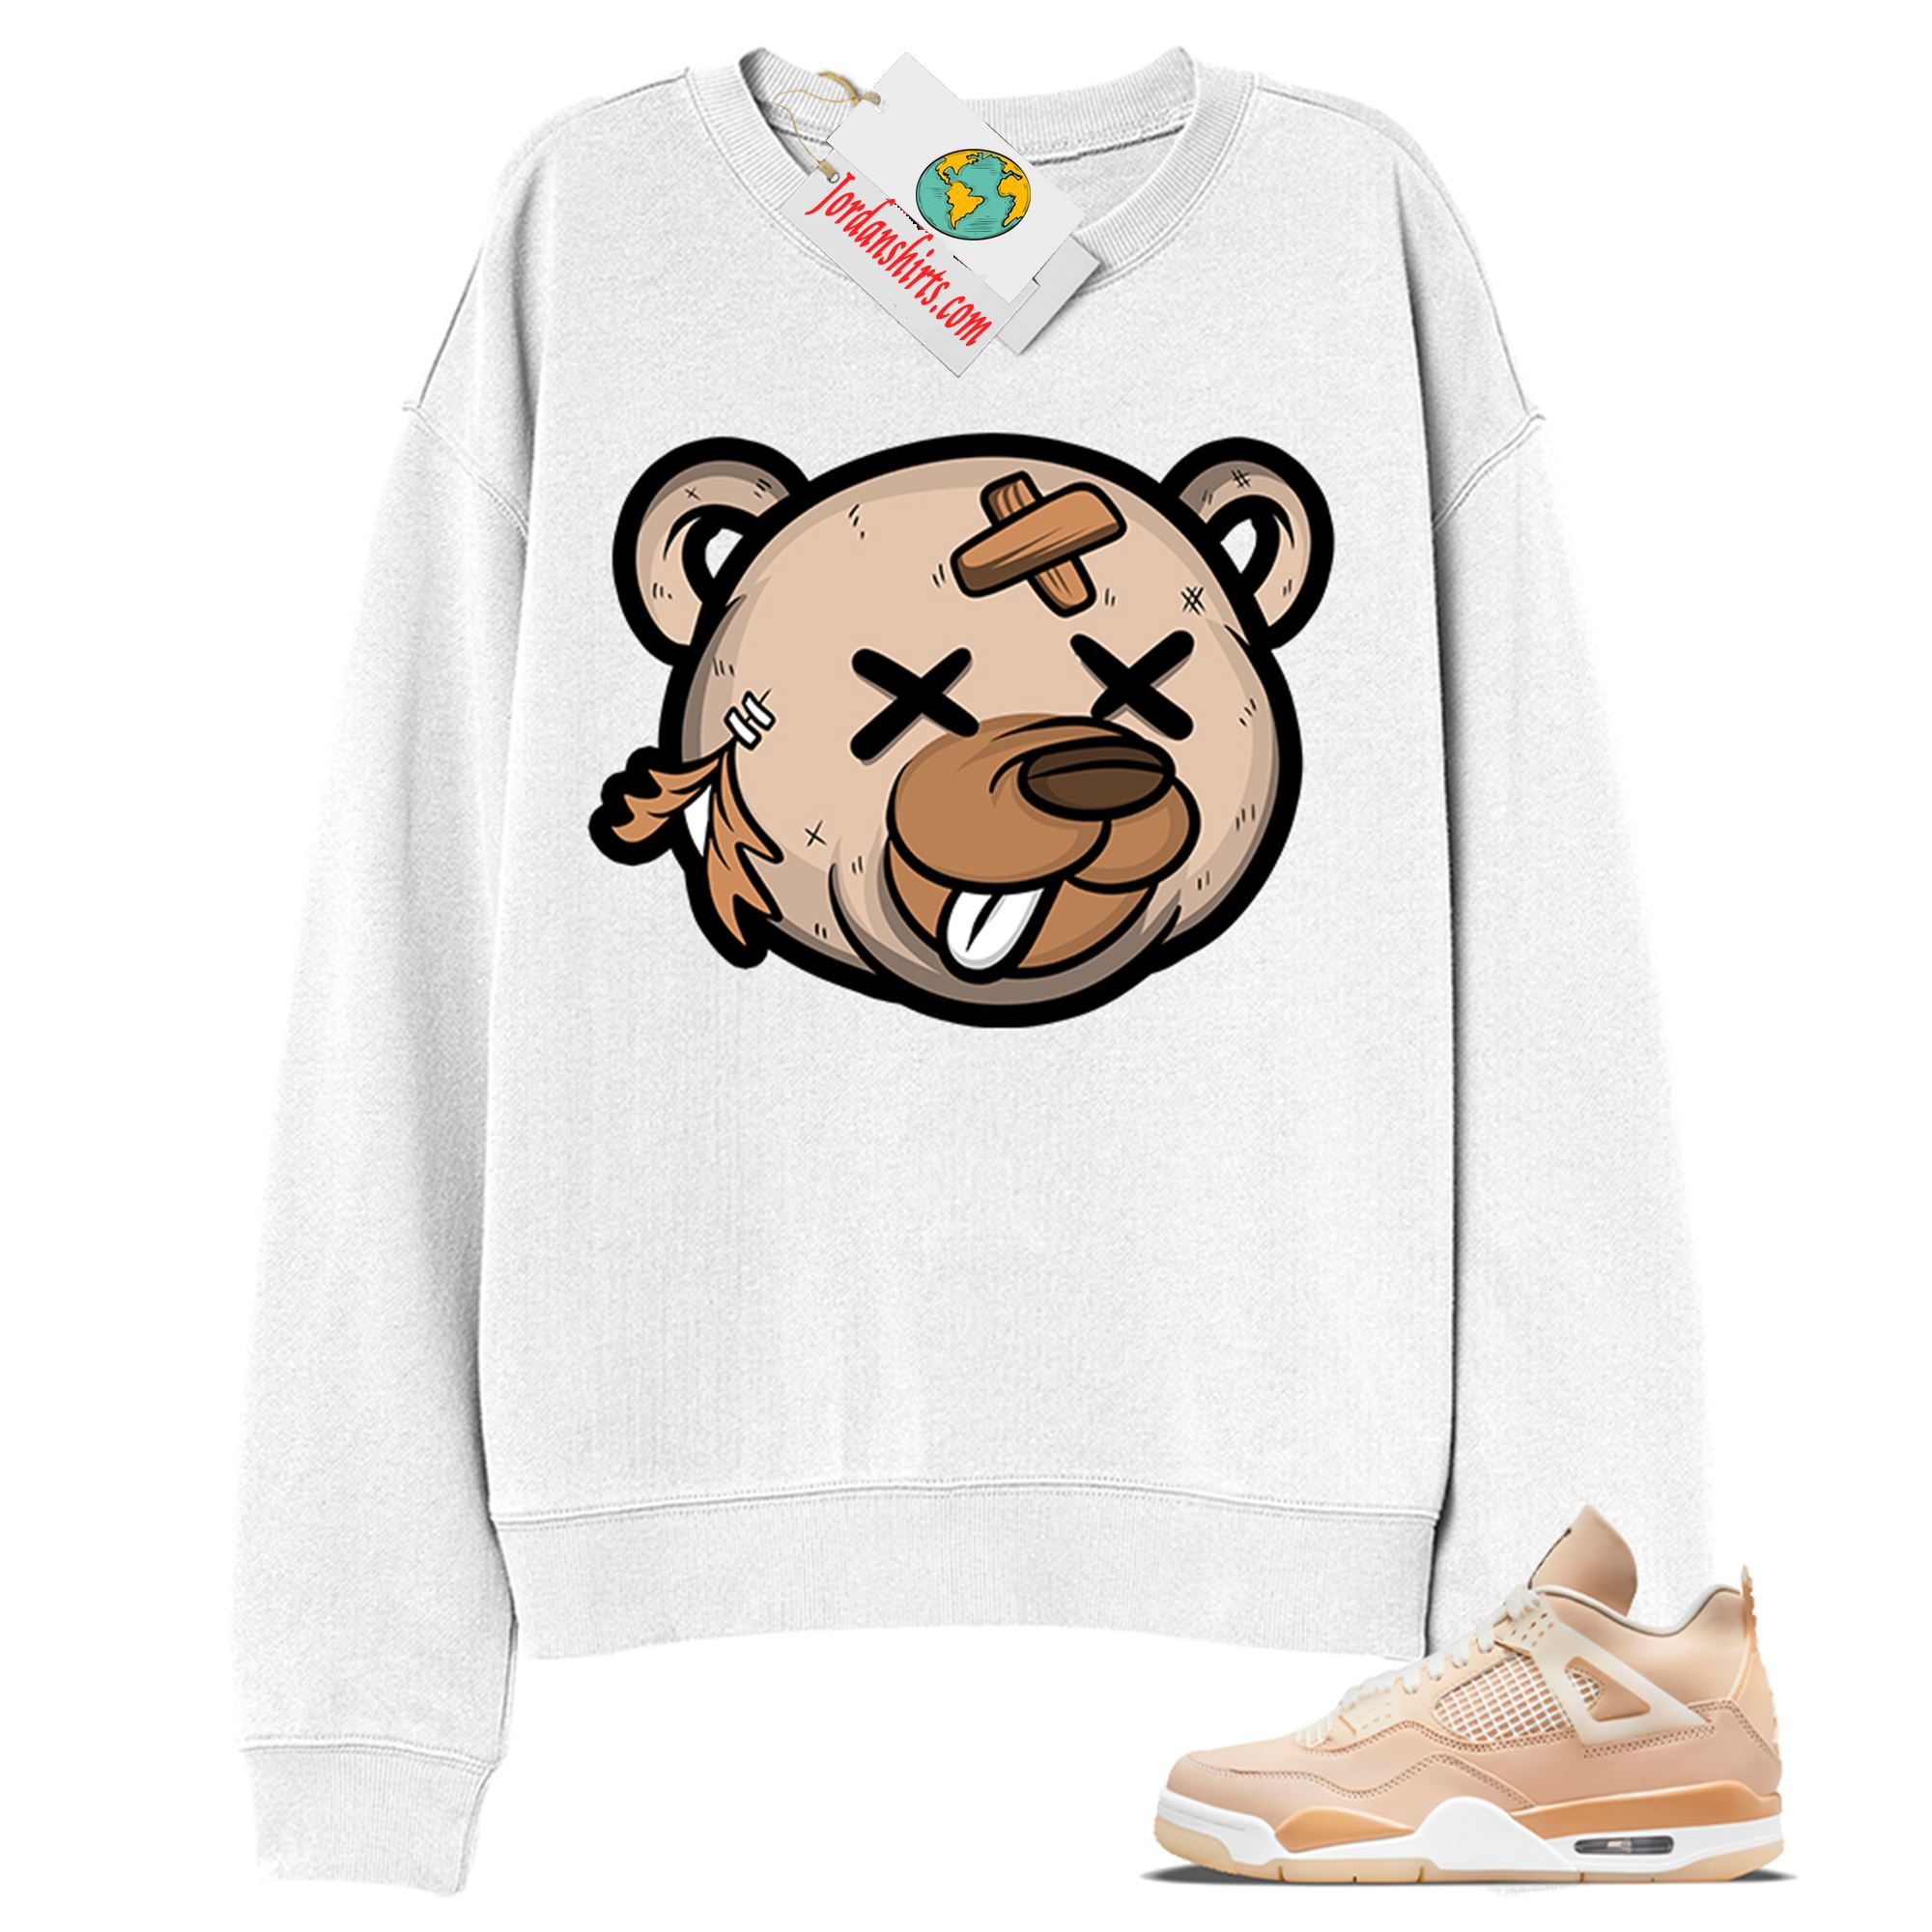 Jordan 4 Sweatshirt, Teddy Bear Head White Sweatshirt Air Jordan 4 Shimmer 4s Plus Size Up To 5xl